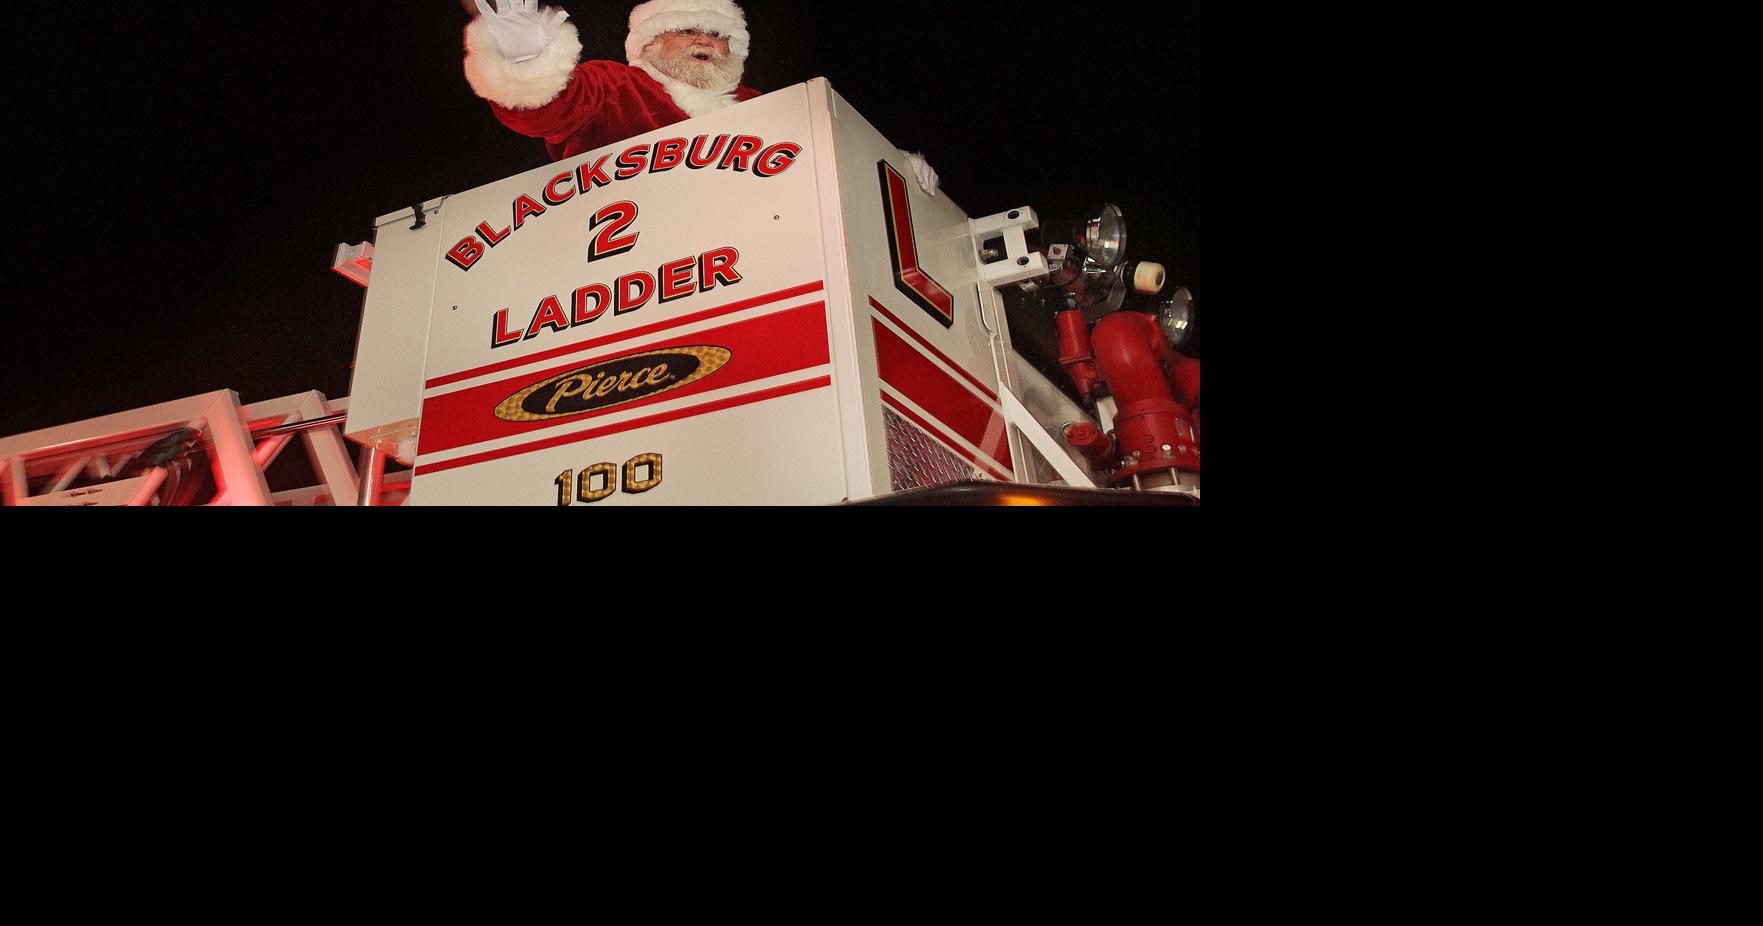 Blacksburg Christmas Parade